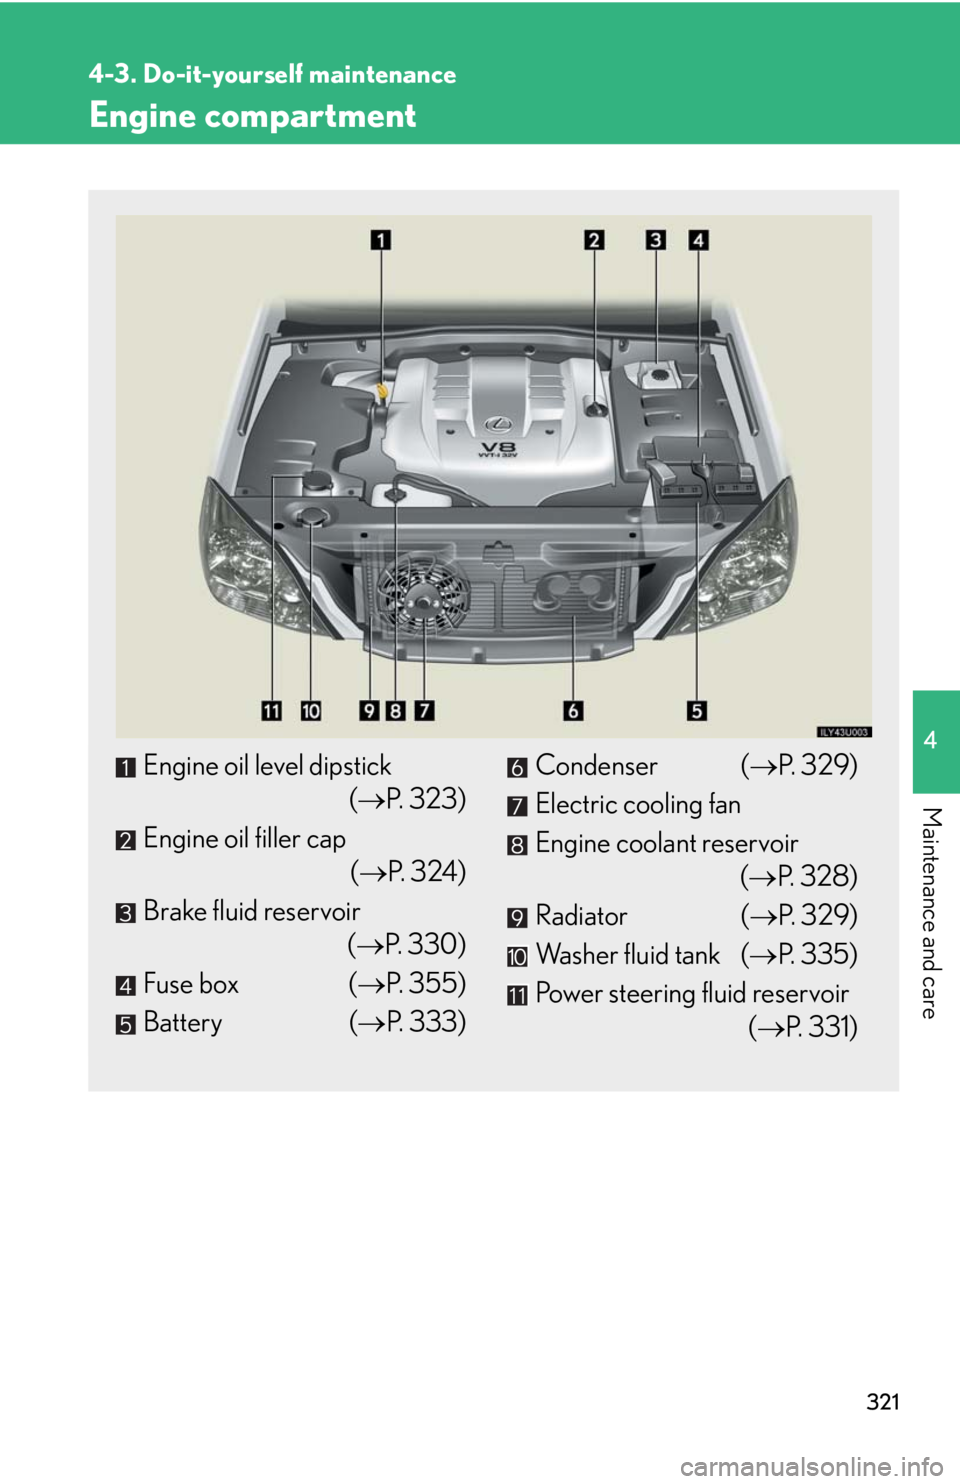 Lexus GX470 2008  Do-it-yourself maintenance / LEXUS 2008 GX470 OWNERS MANUAL (OM60D82U) 321
4-3. Do-it-yourself maintenance
4
Maintenance and care
Engine compartment
Engine oil level dipstick(P. 323)
Engine oil filler cap (P. 324)
Brake fluid reservoir (P. 330)
Fuse box ( P. 